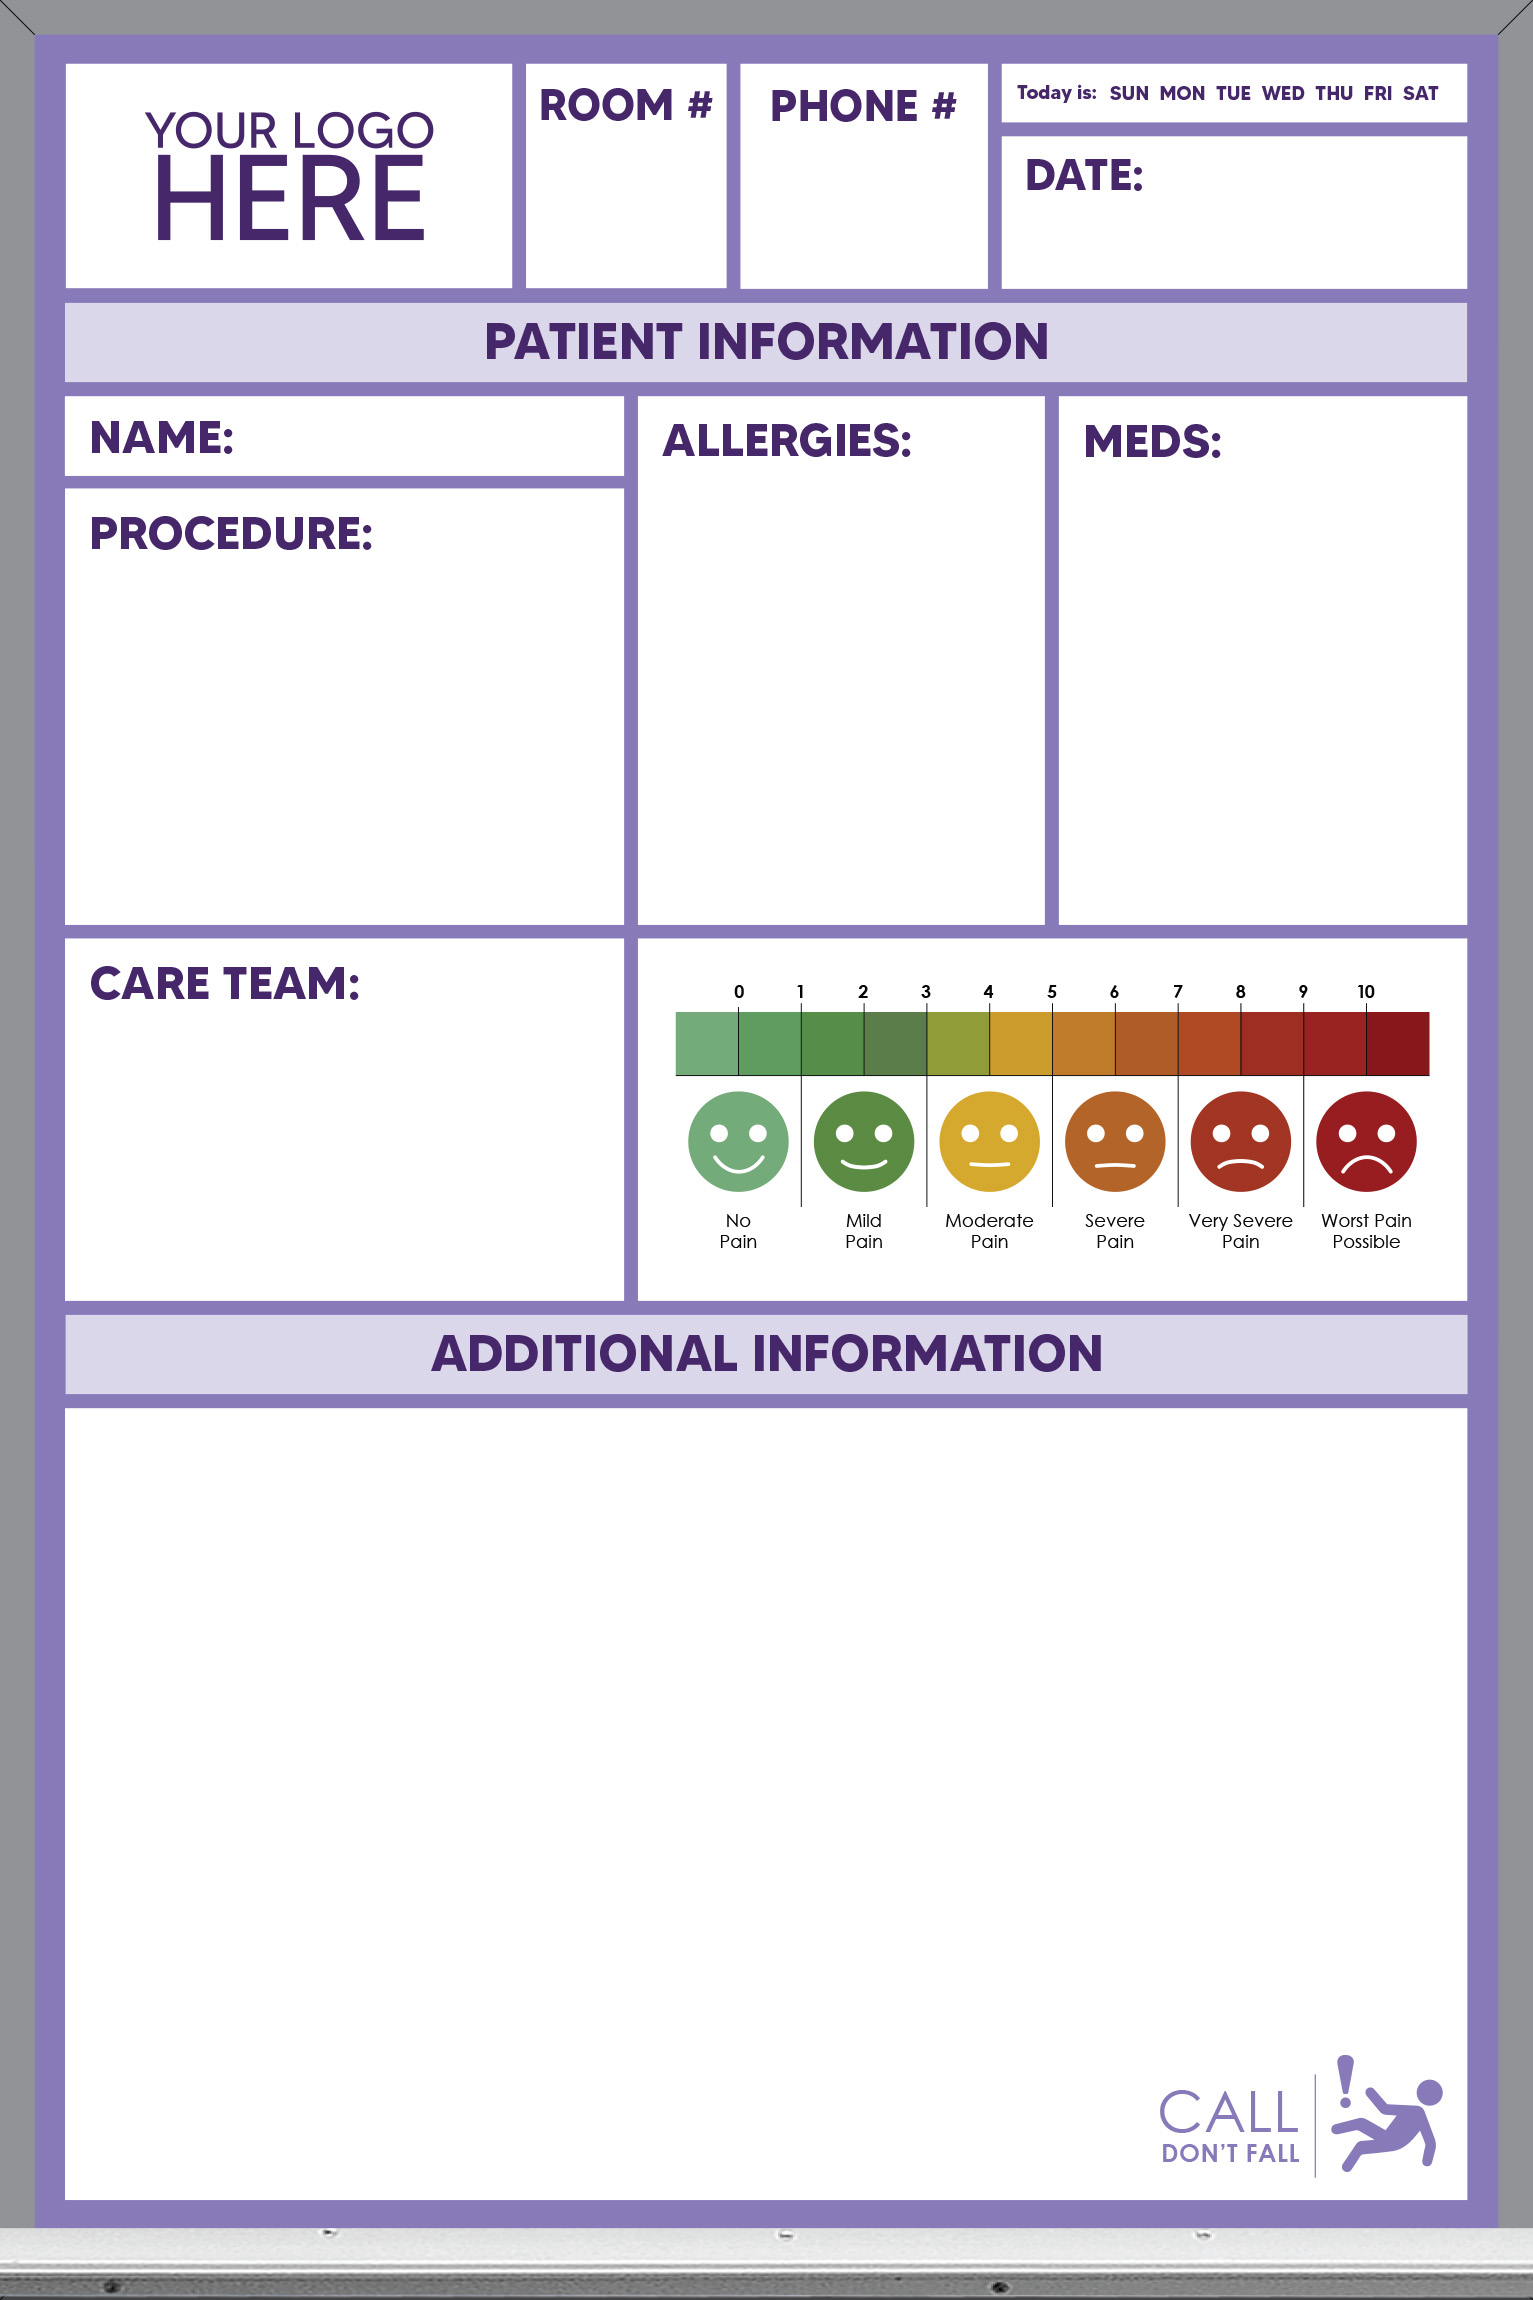 pre-printed patient care whiteboard, purple color, 3x2